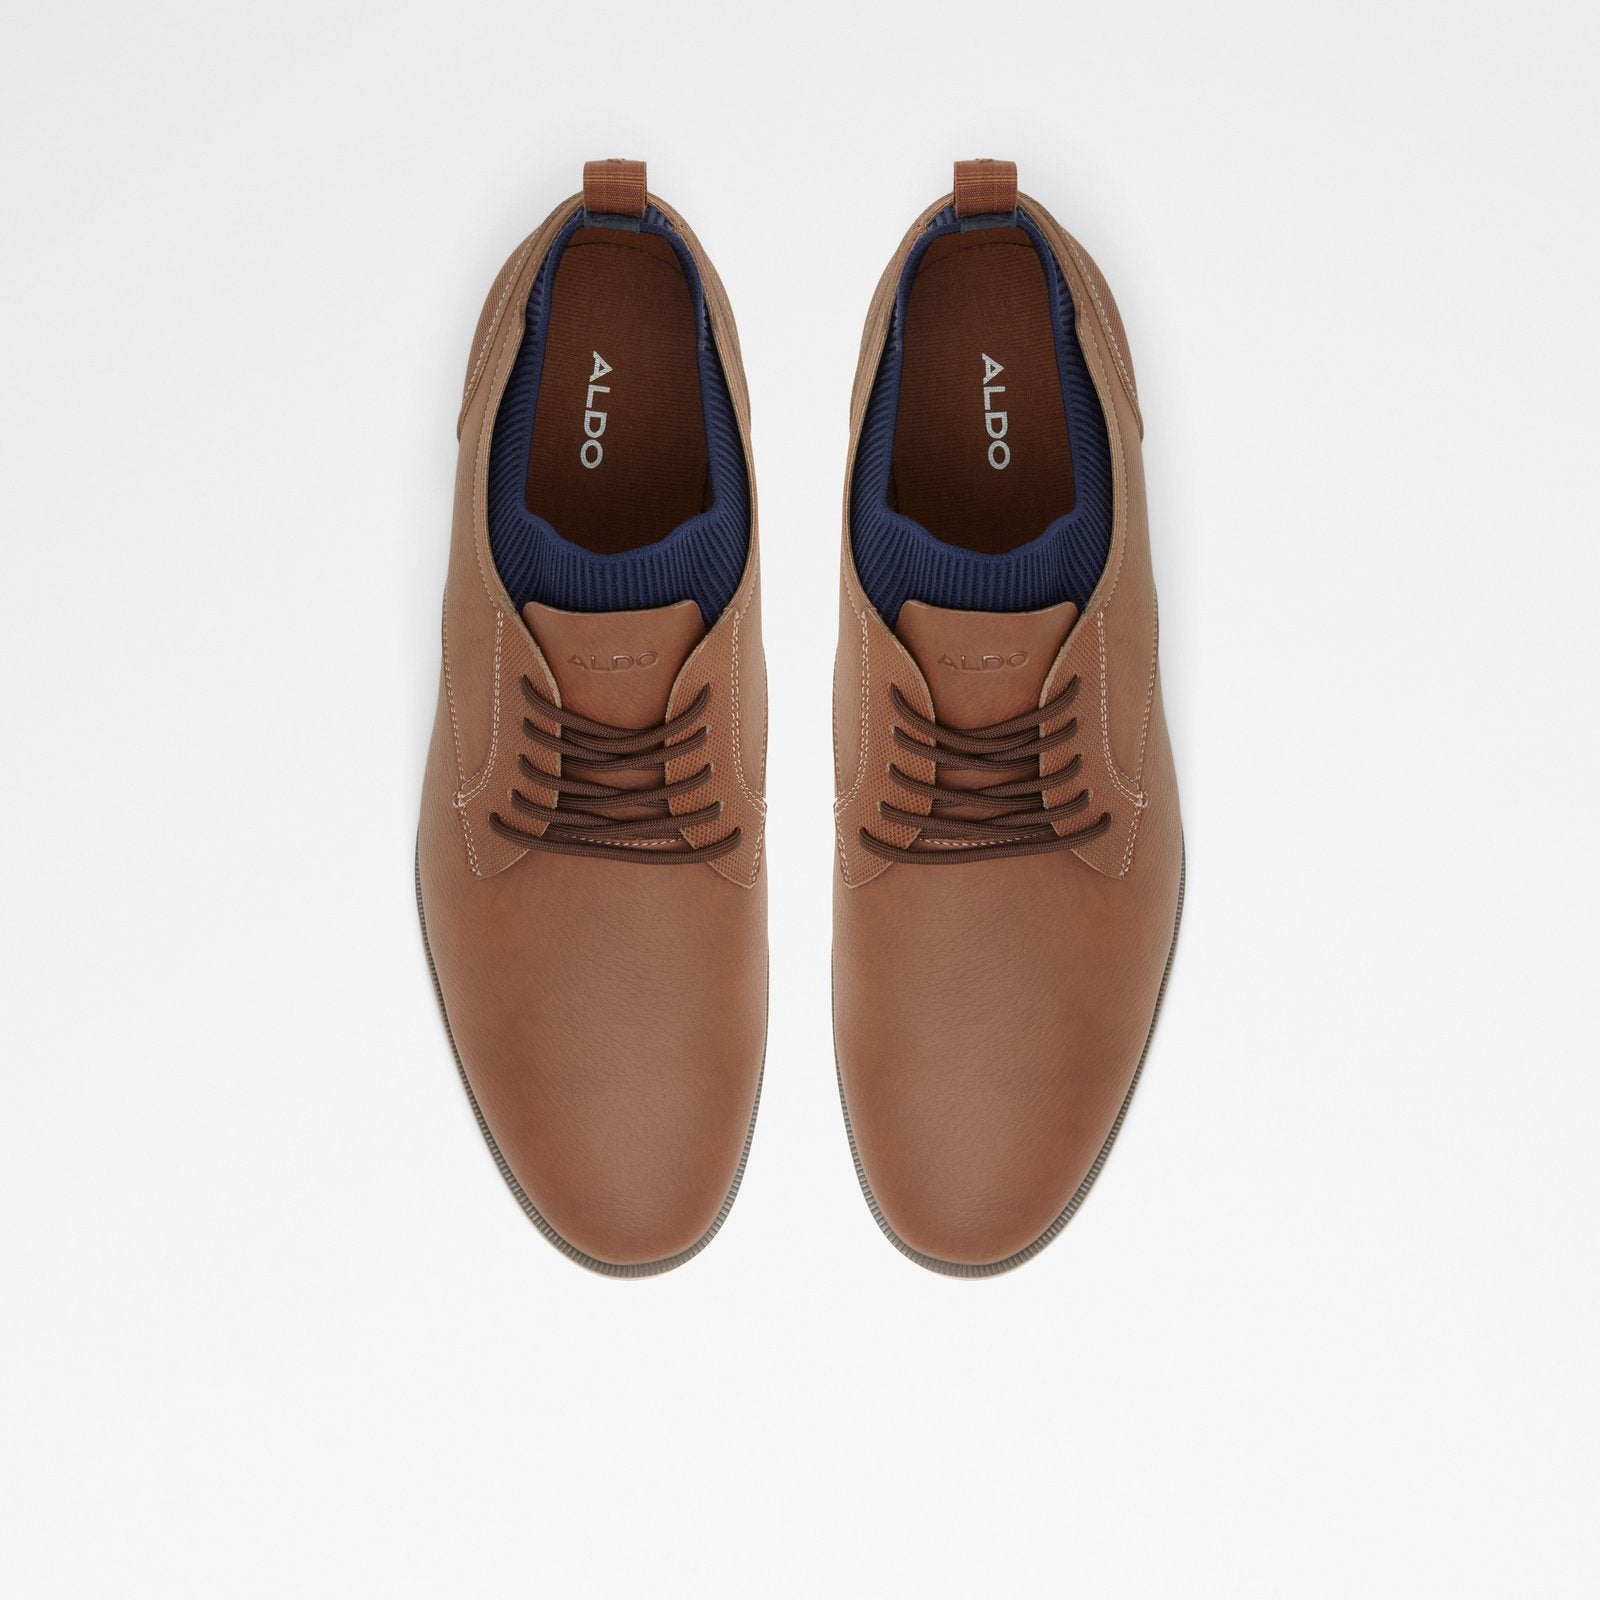 Gladosen / Dress Shoes Men Shoes - Cognac - ALDO KSA